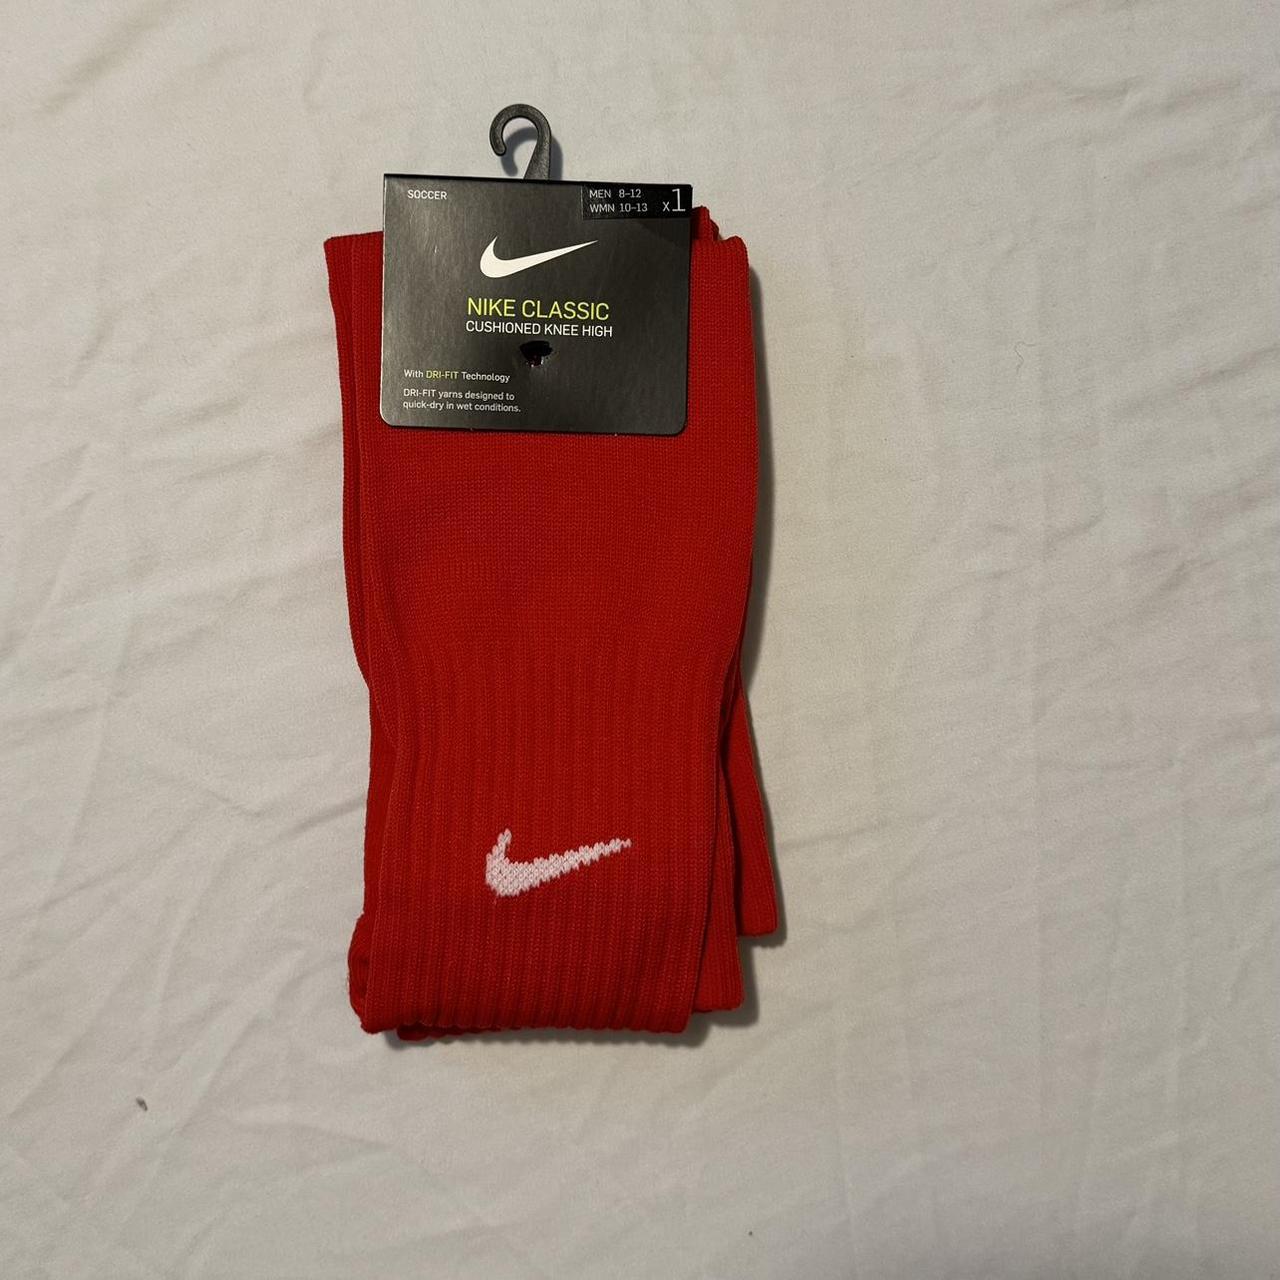 Red Nike Soccer Socks Retail $12 - Depop